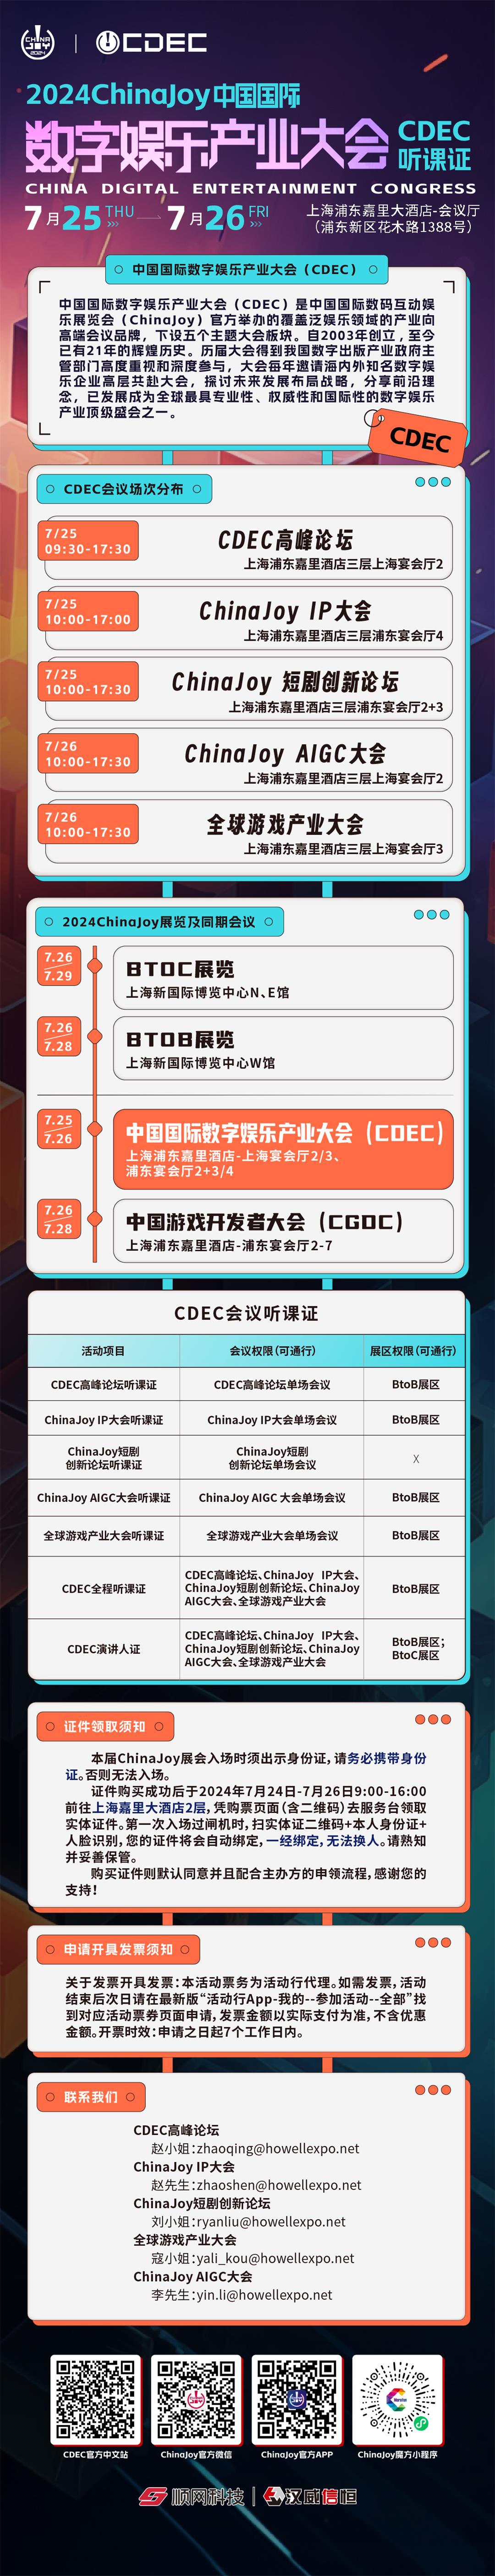 CDEC中文长图.jpg